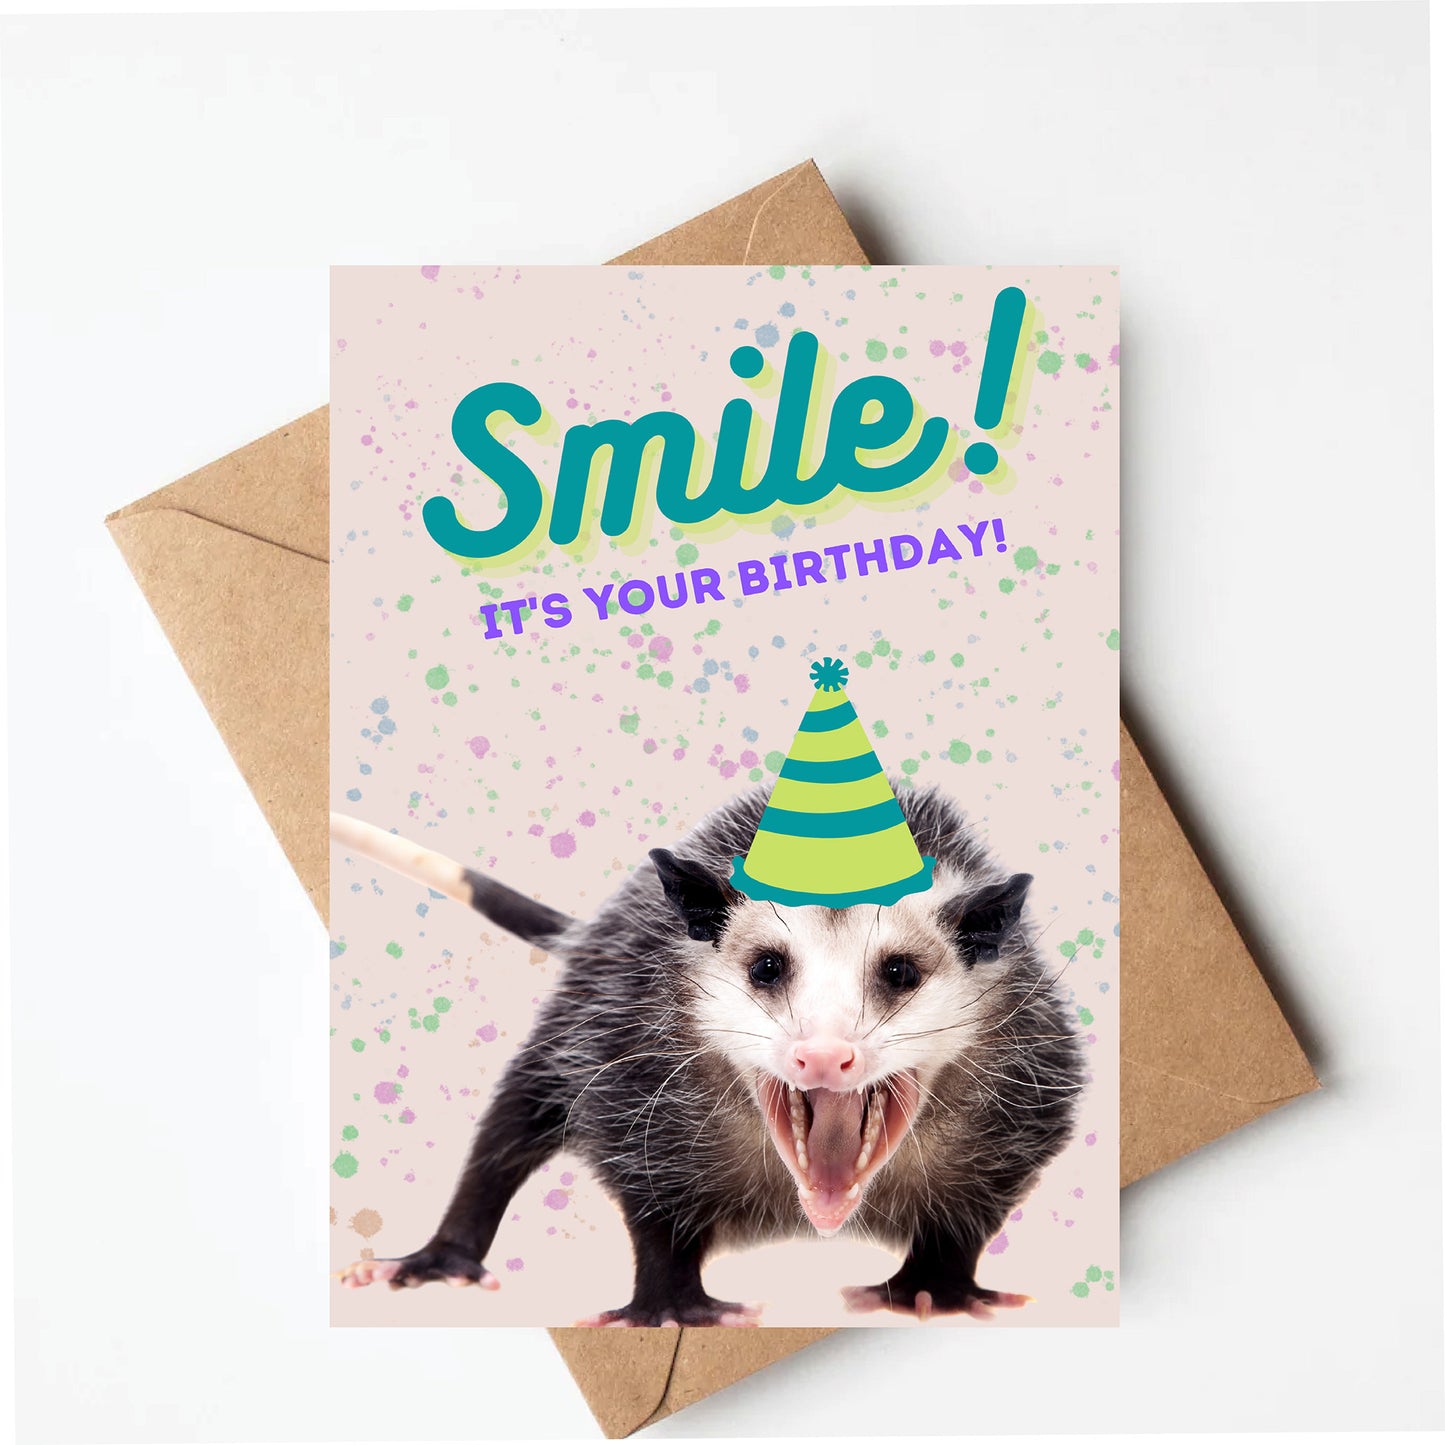 Possum birthday card